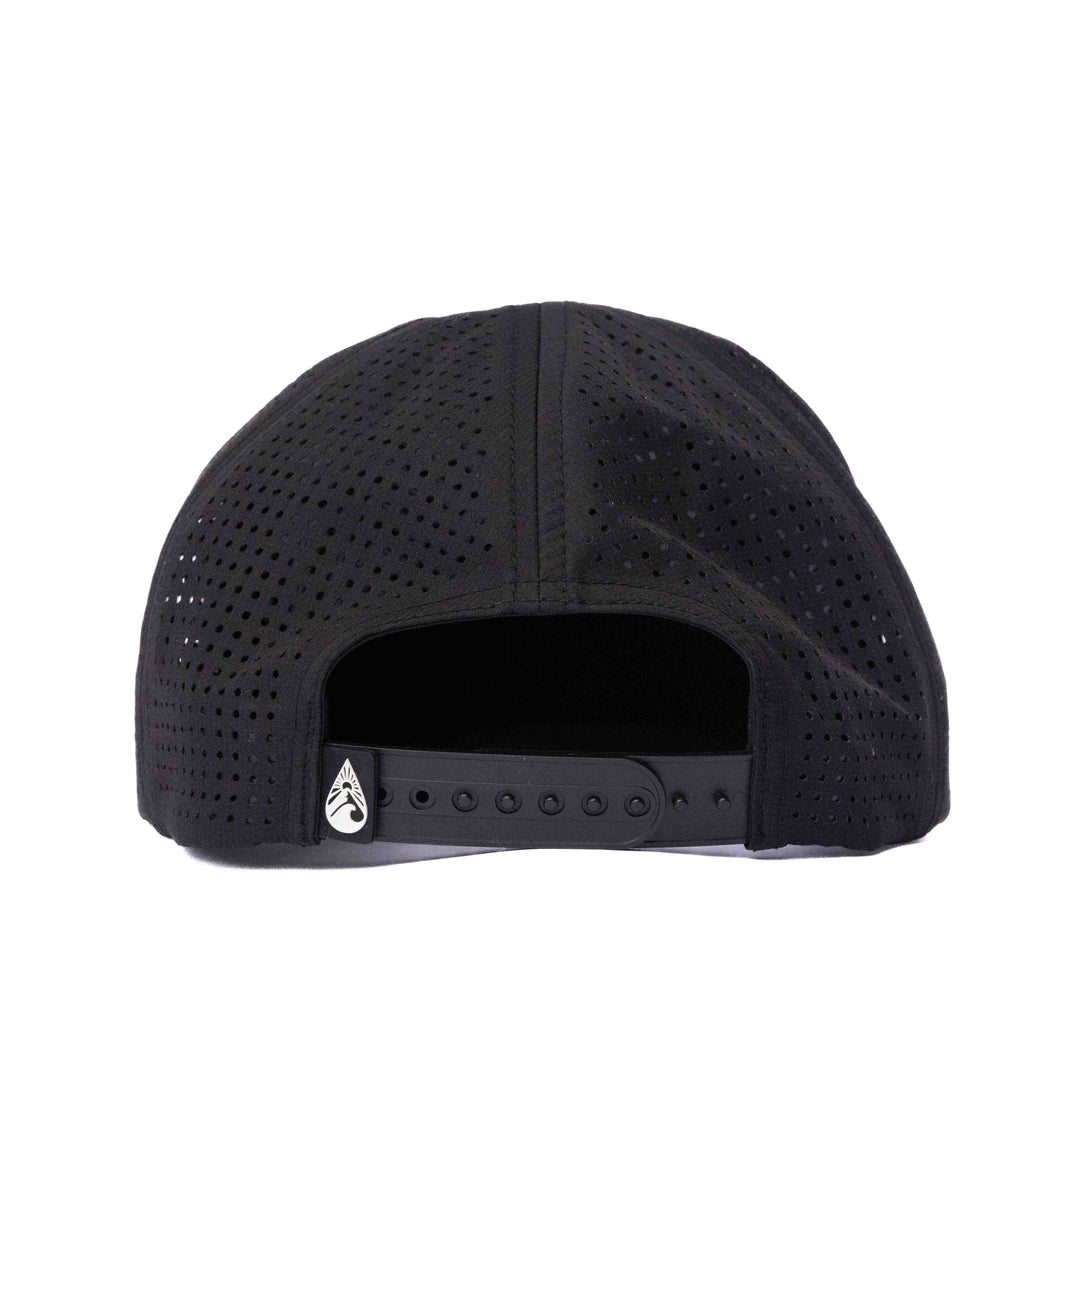 Tropicam Black Hydro Hat